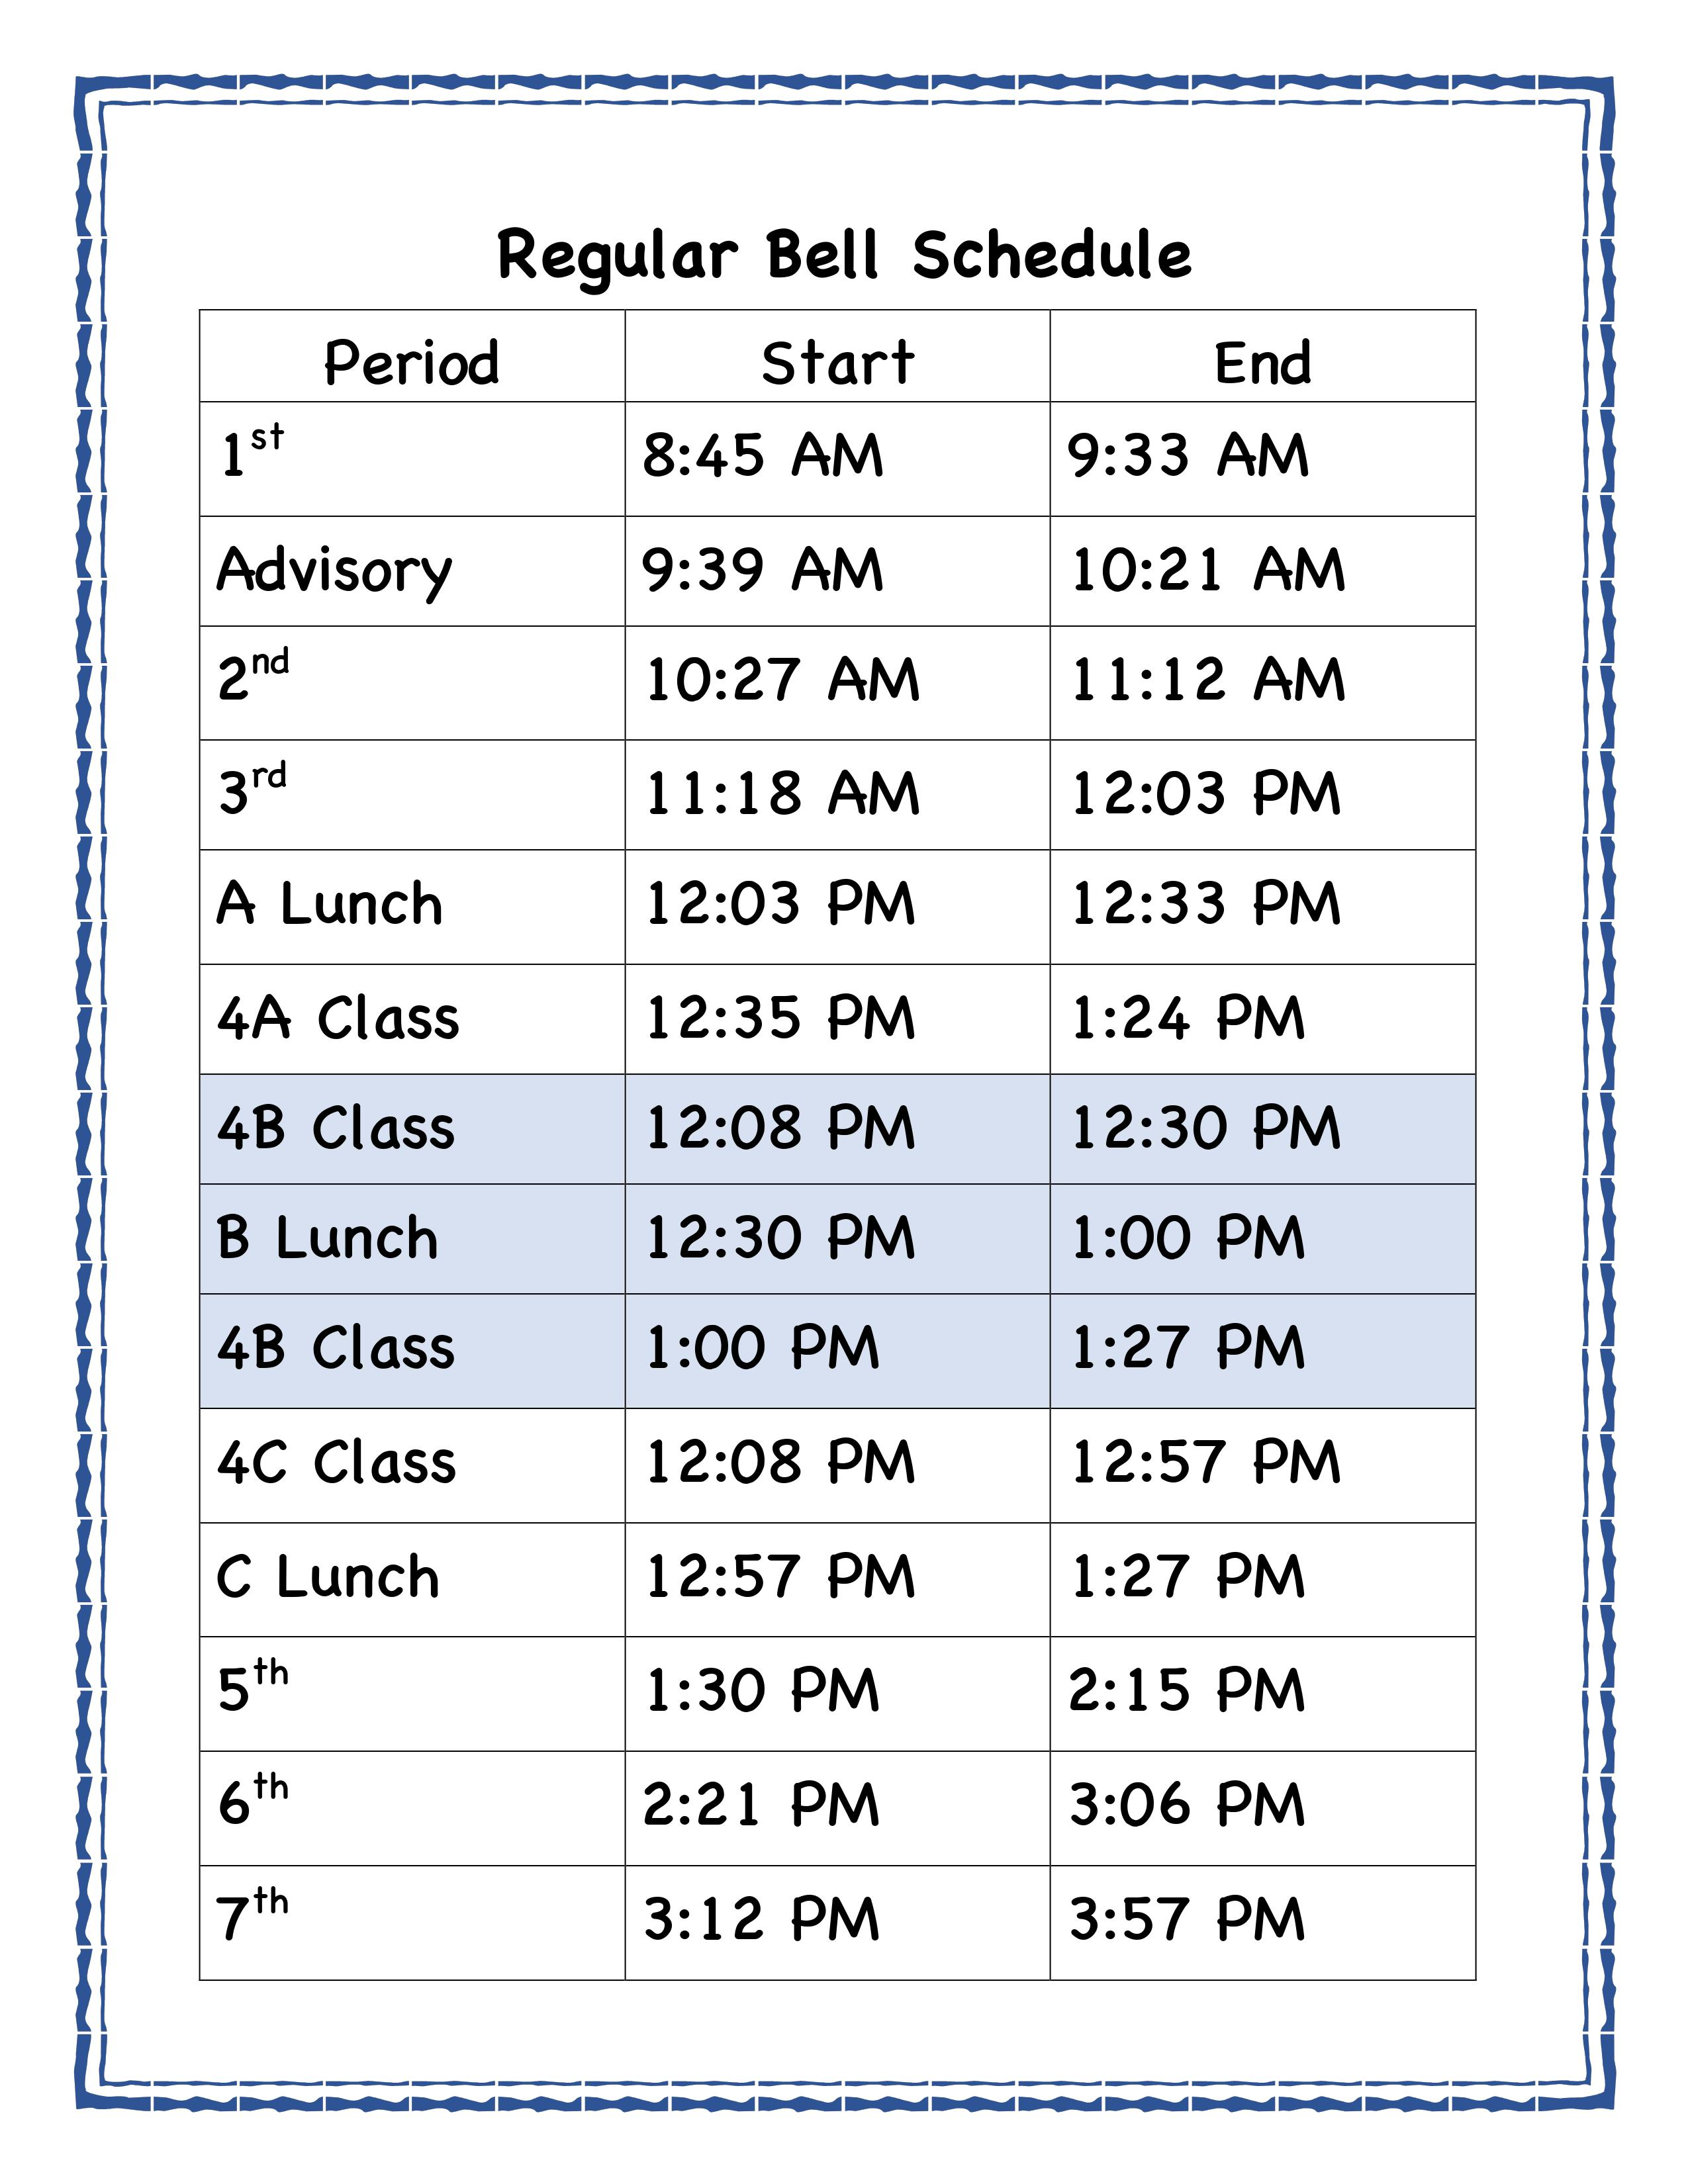 Central Regular Bell Schedule